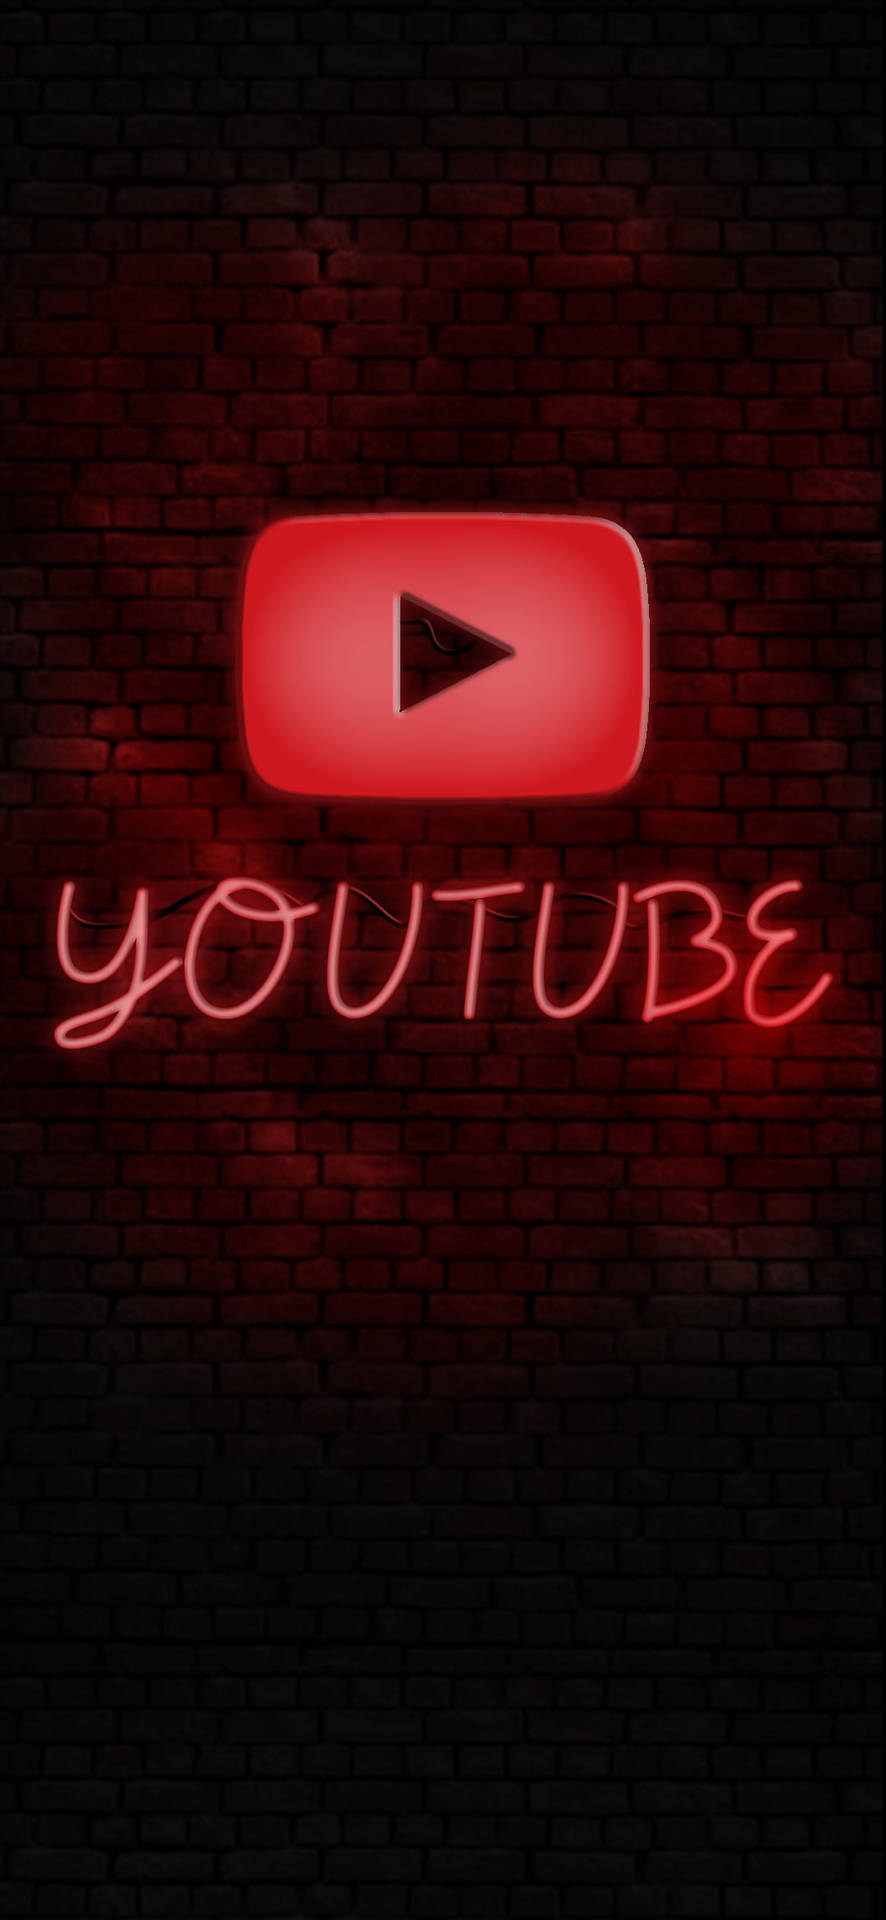 Youtube Logo Black Brick Wall Wallpaper